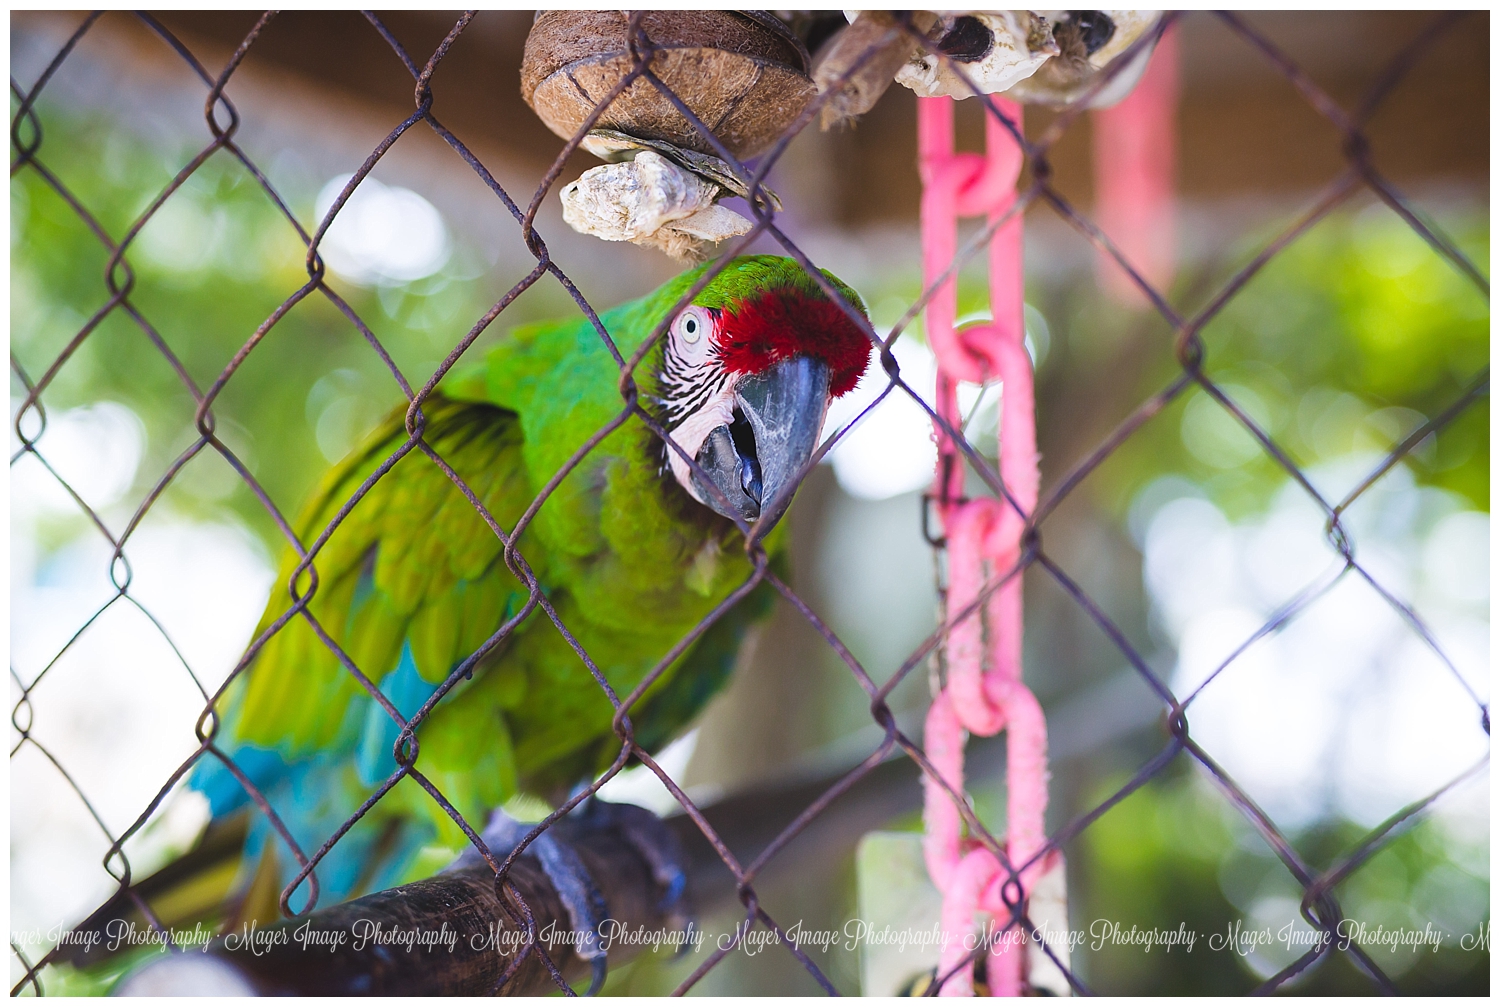 parrot sandals resort pet pretty bird